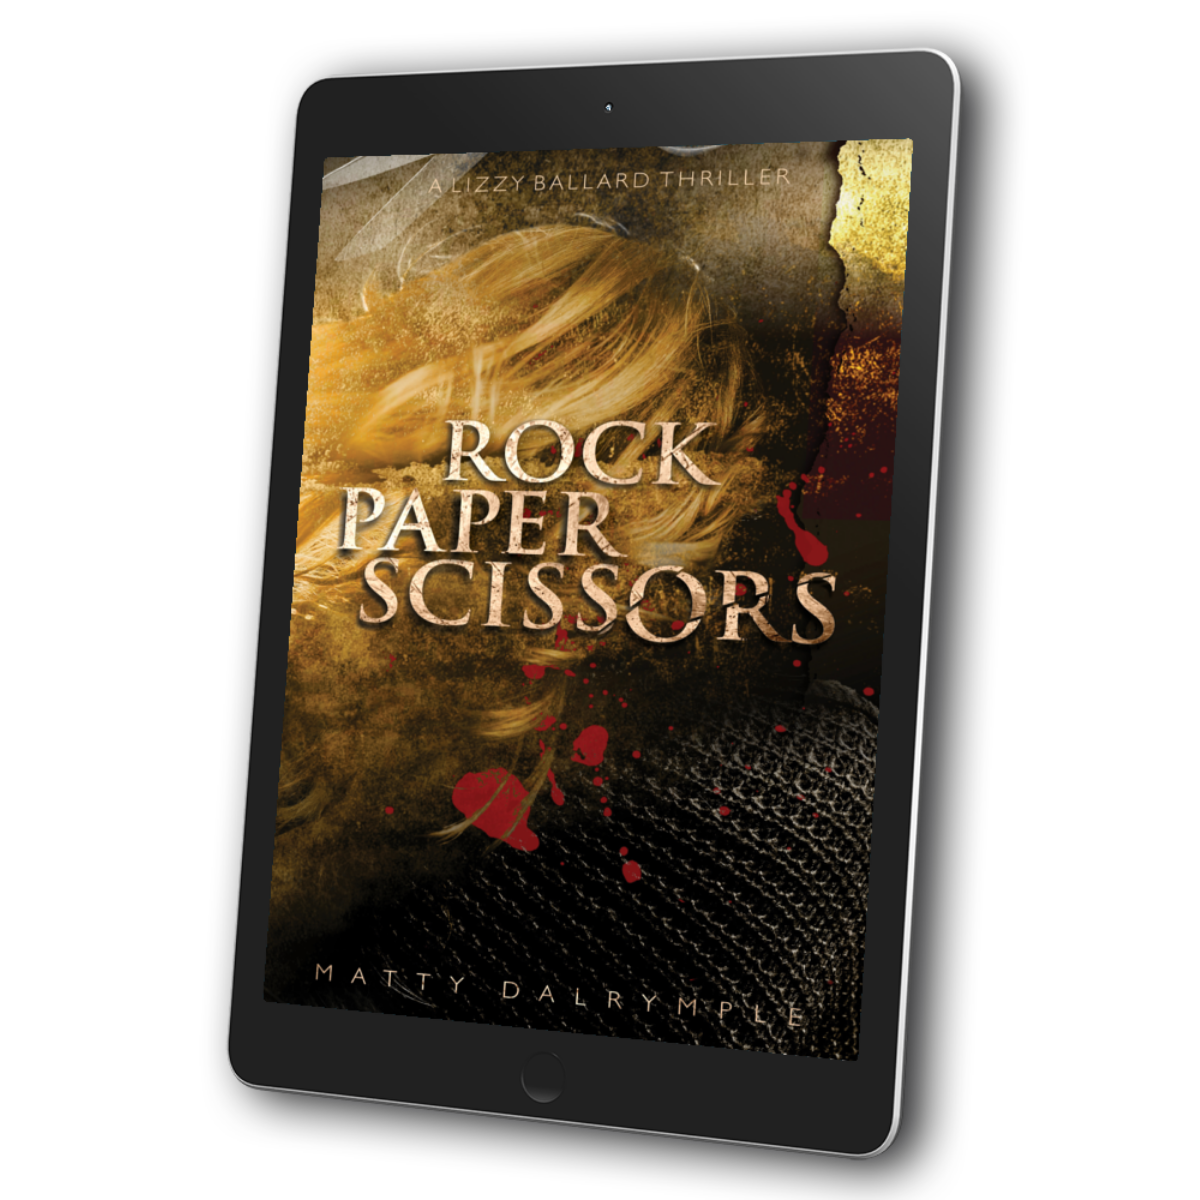 Rock Paper Scissors: A Lizzy Ballard Thriller Book 1 SIGNED *LARGE PRINT*  EDITION - Payhip